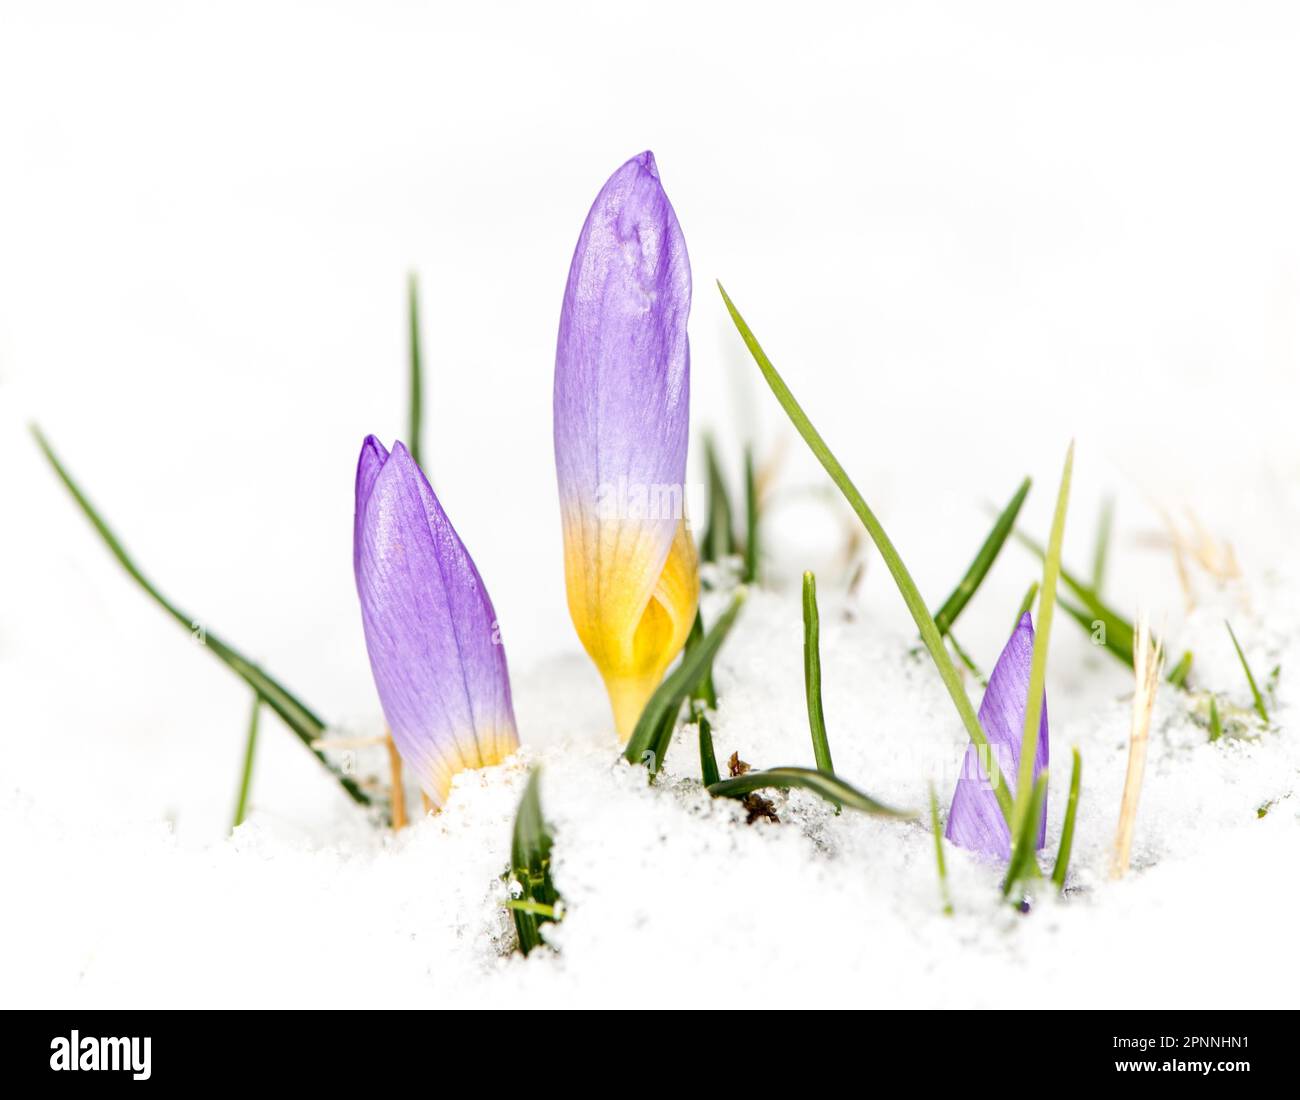 Frühling ist angekommen - erste Krokusblüten im Schnee Stockfoto